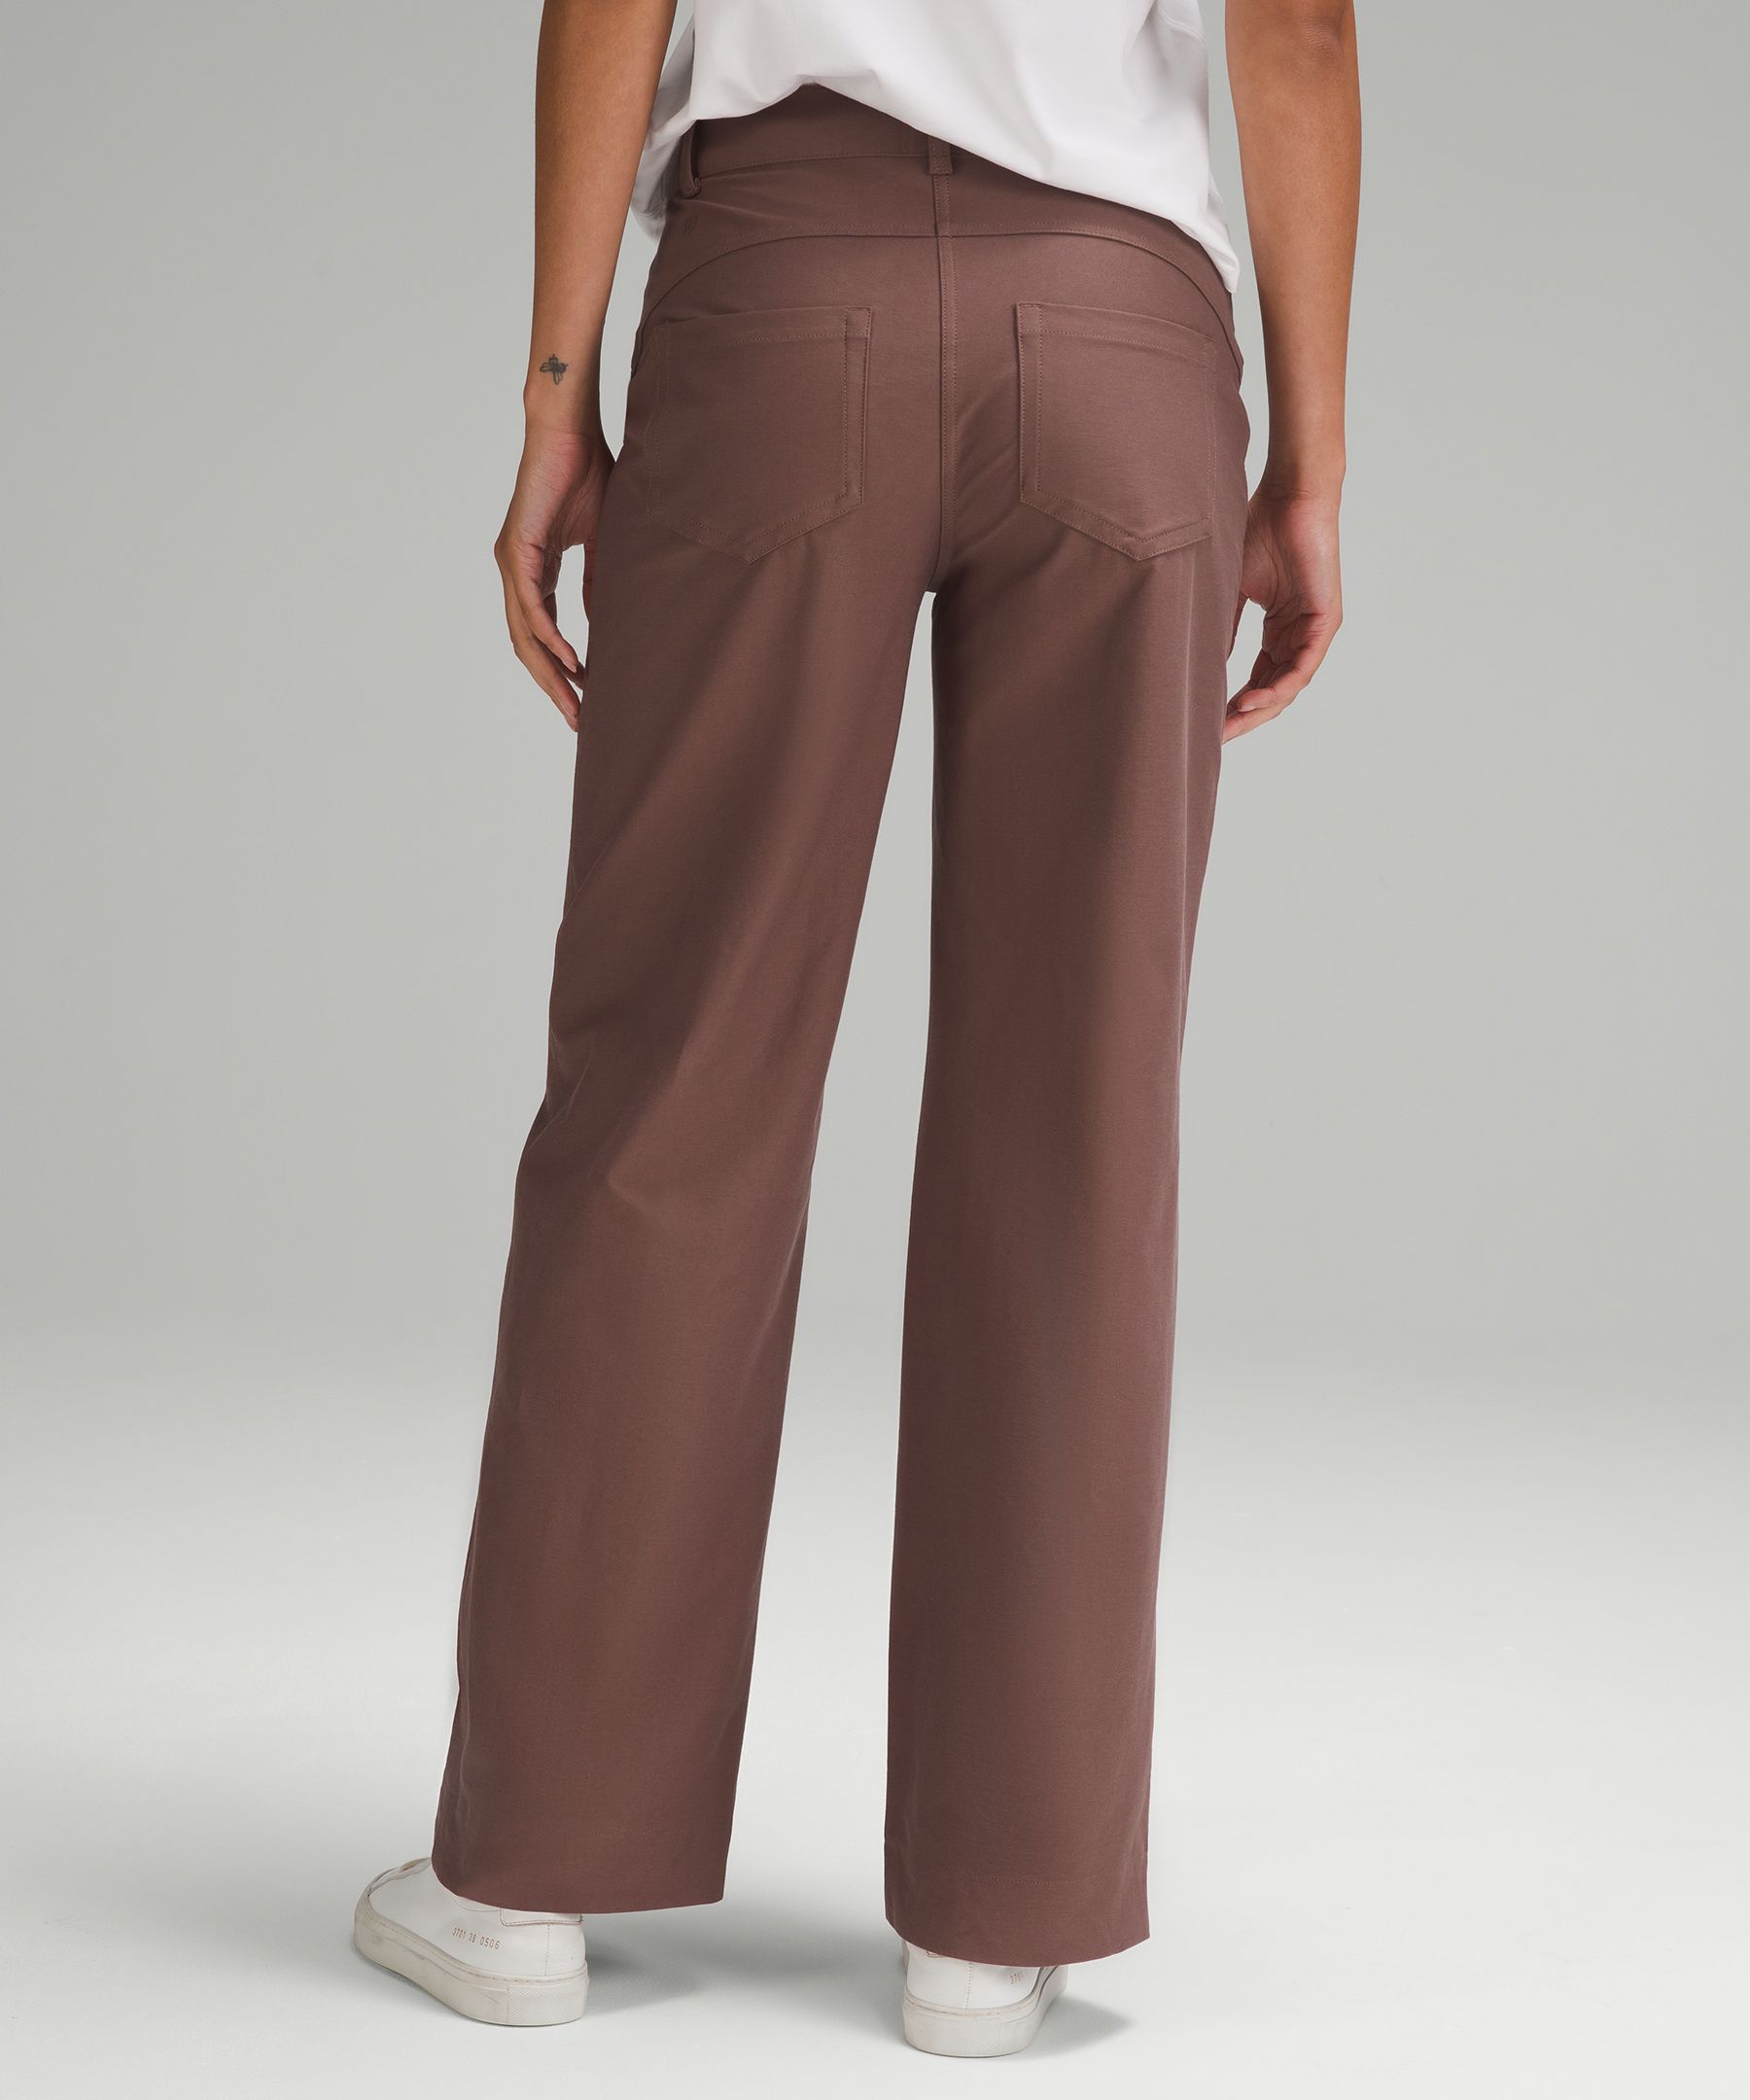 Lululemon Women's City Sleek 5 Pocket Pant 30